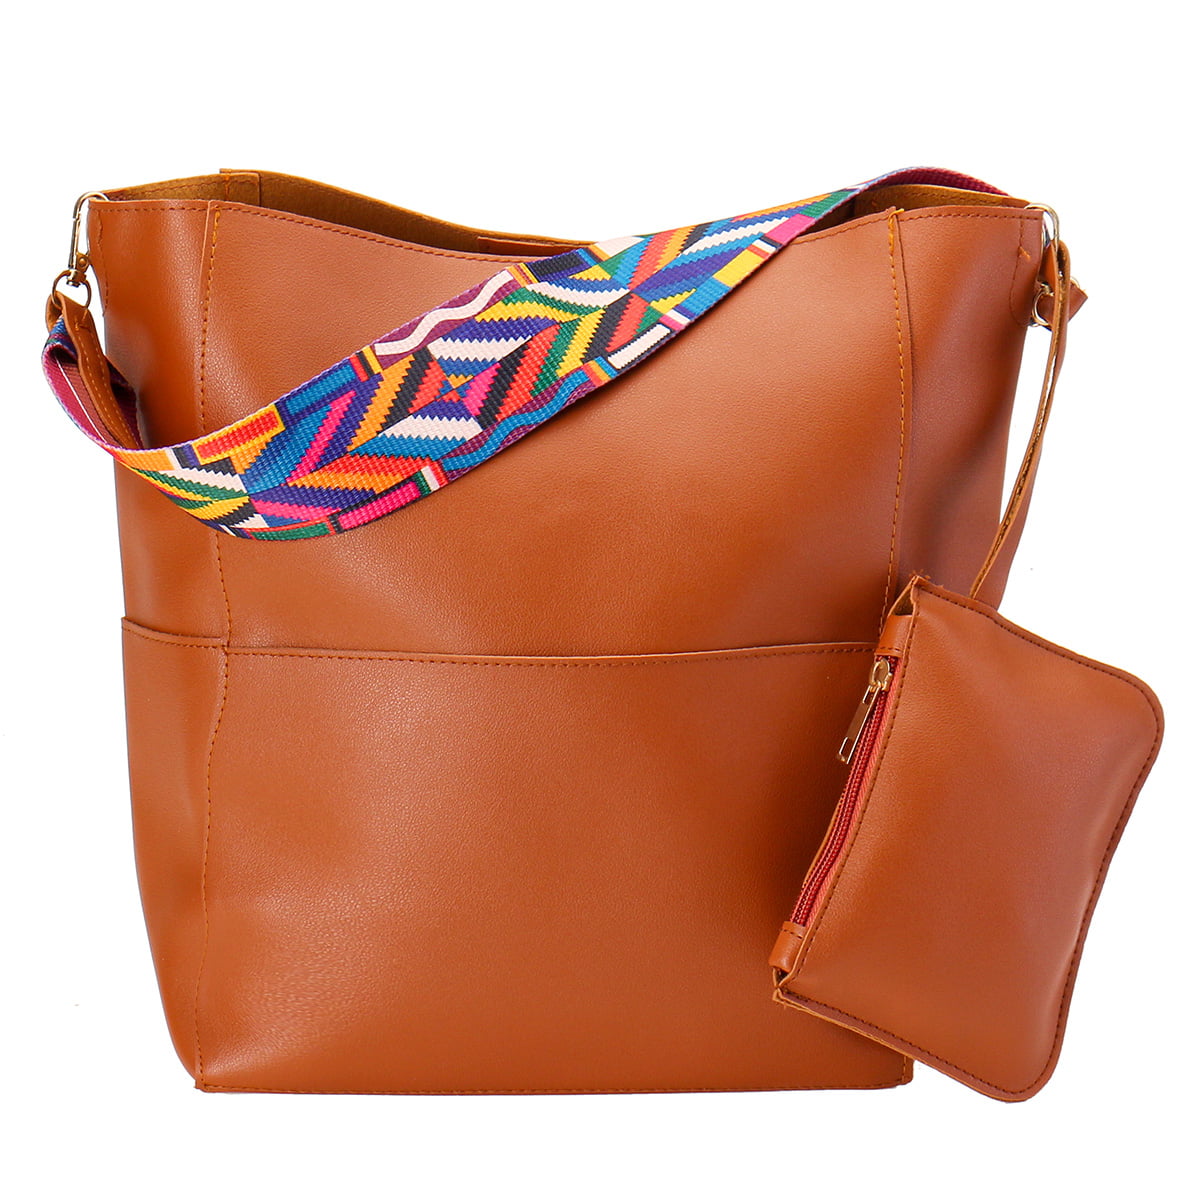 New Womens Handbag Faux Leather Ladies Shoulder Cross Body Bag Satchel Hobo Bag 